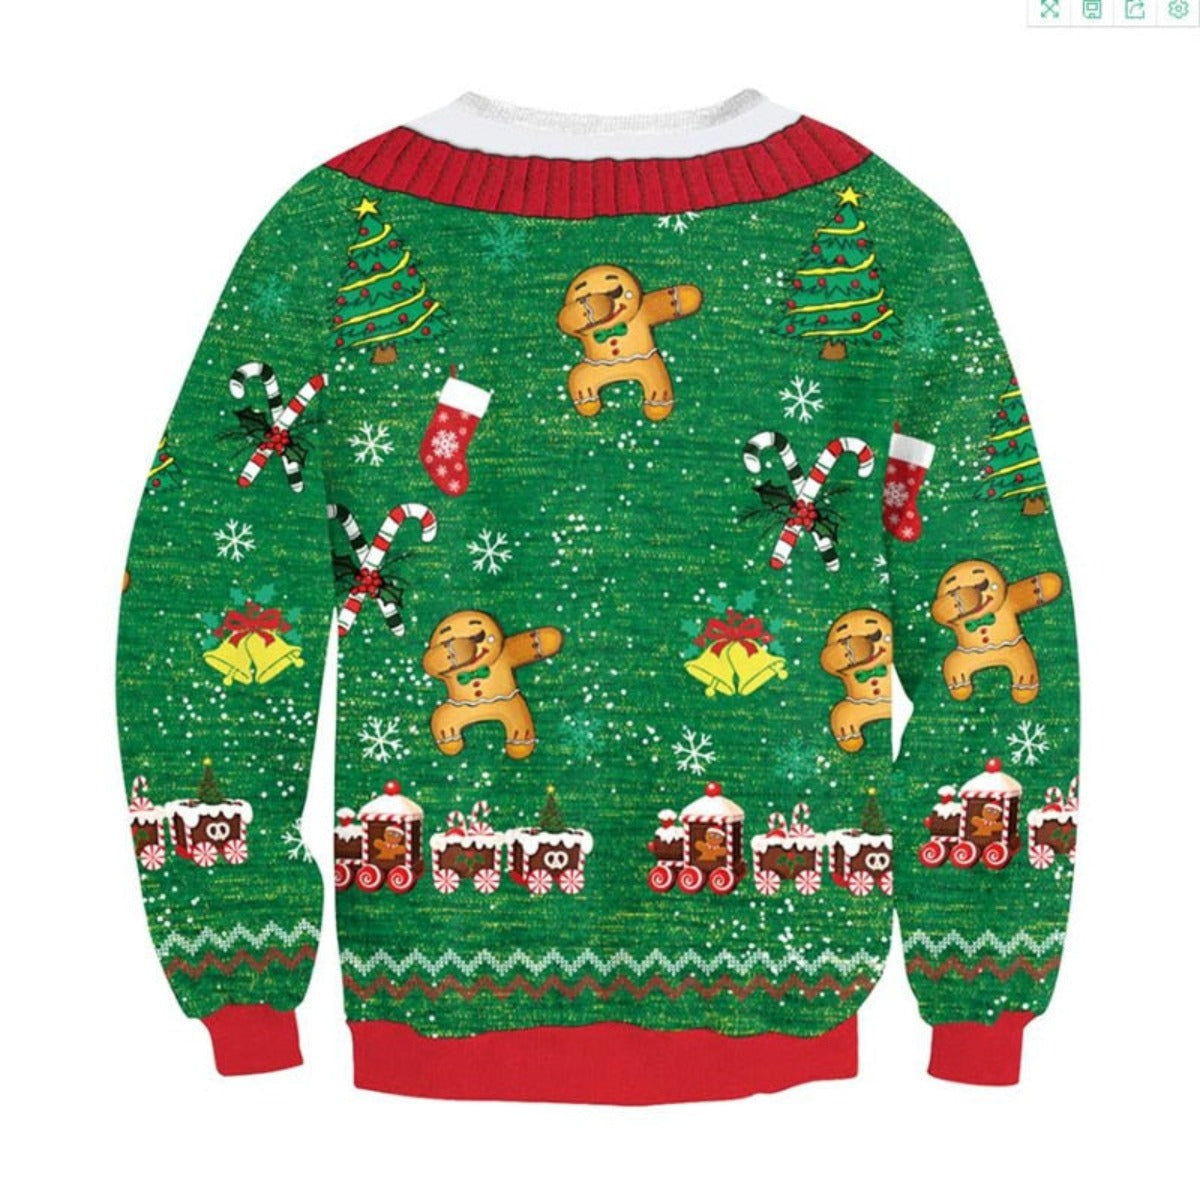 Polo w/ Santa Neck Tie Ugly Christmas Sweater